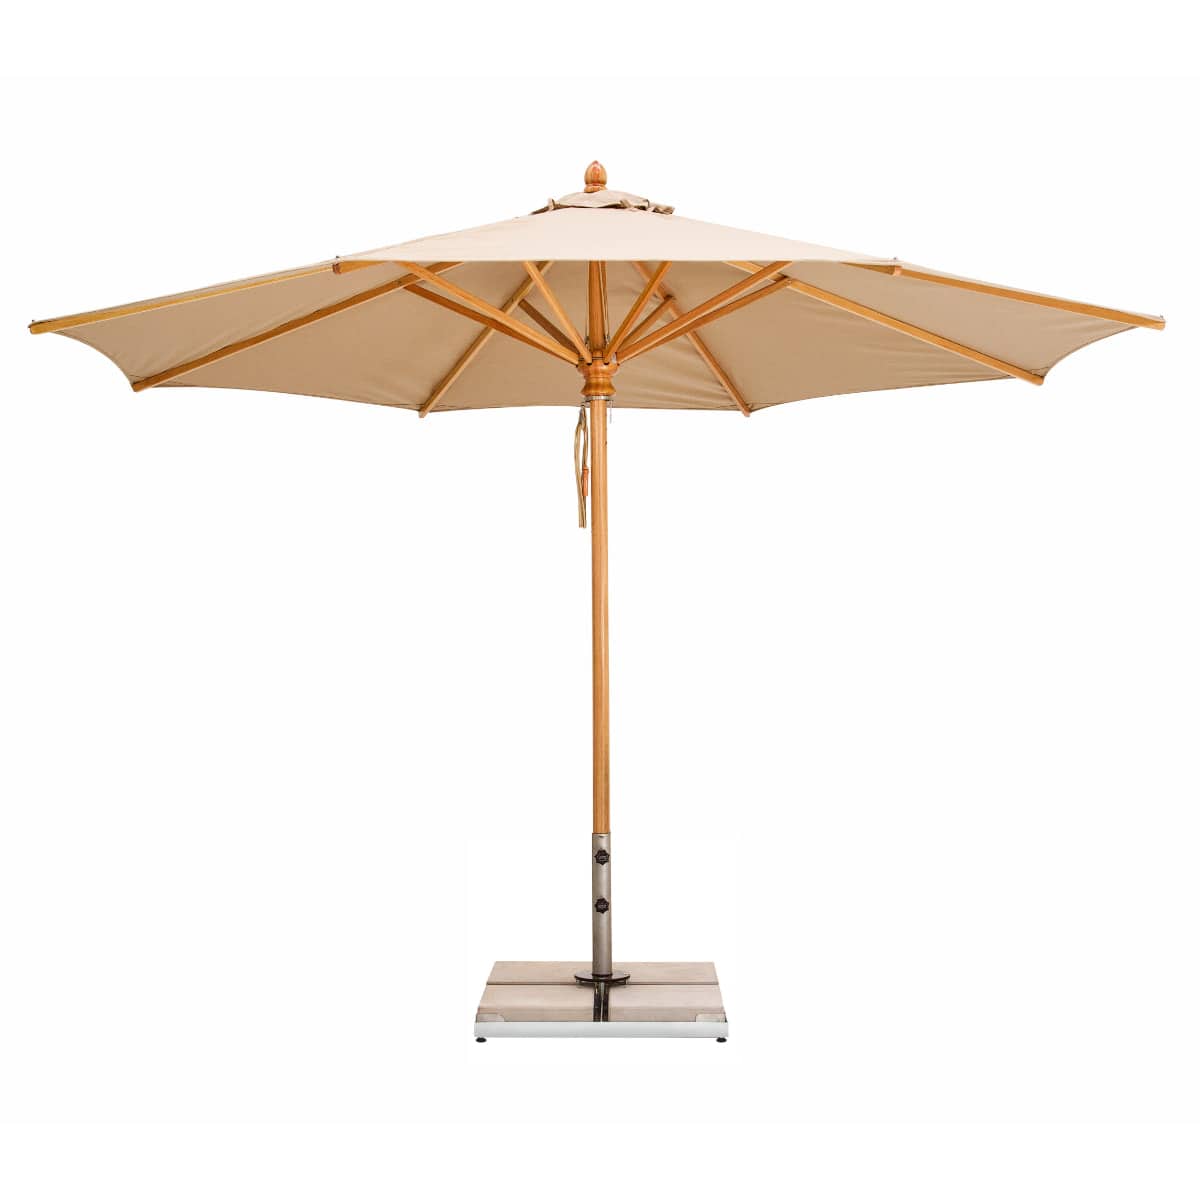 Woodline Safari Center Pole Umbrella